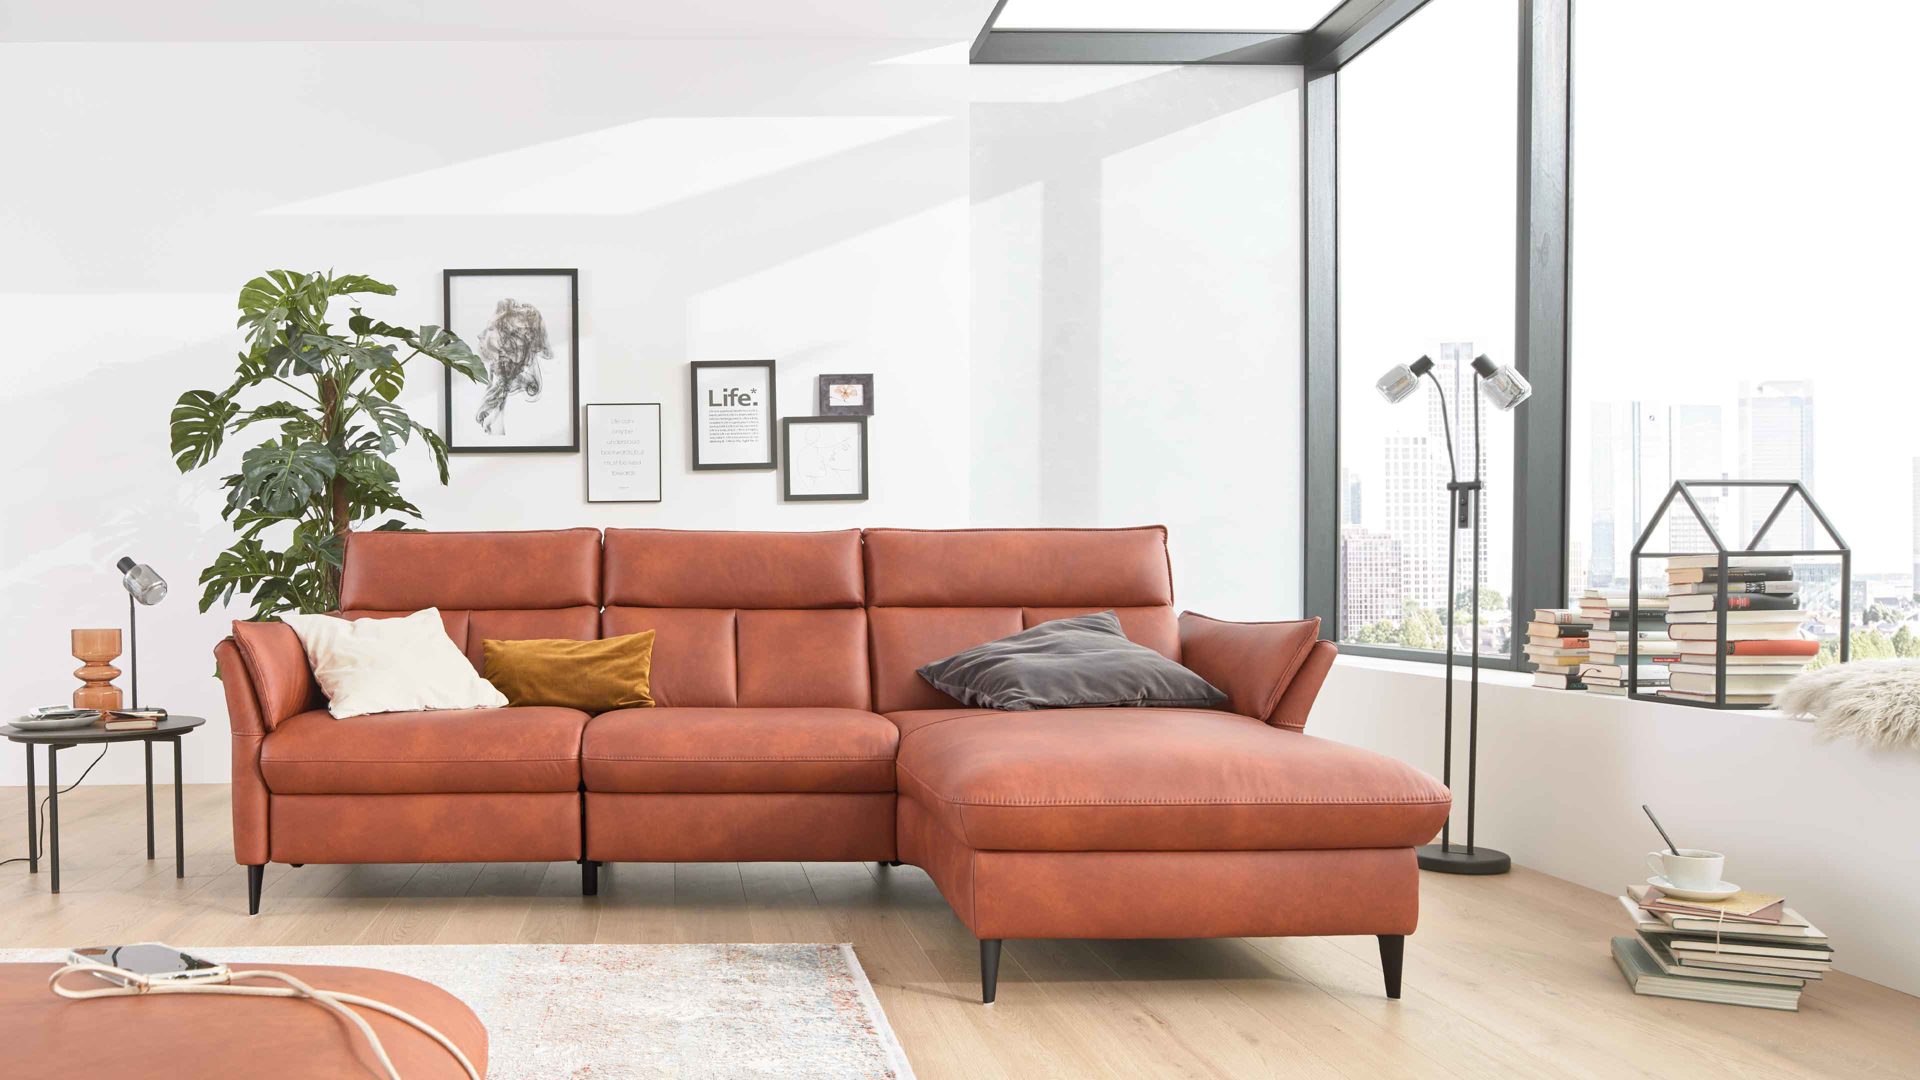 Ecksofa Interliving aus Leder in Orange Interliving Sofa Serie 4058 – Ecksofa cognacfarbenes LongLife-Leder Cloudy - Stellfläche ca. 279 x 171 cm